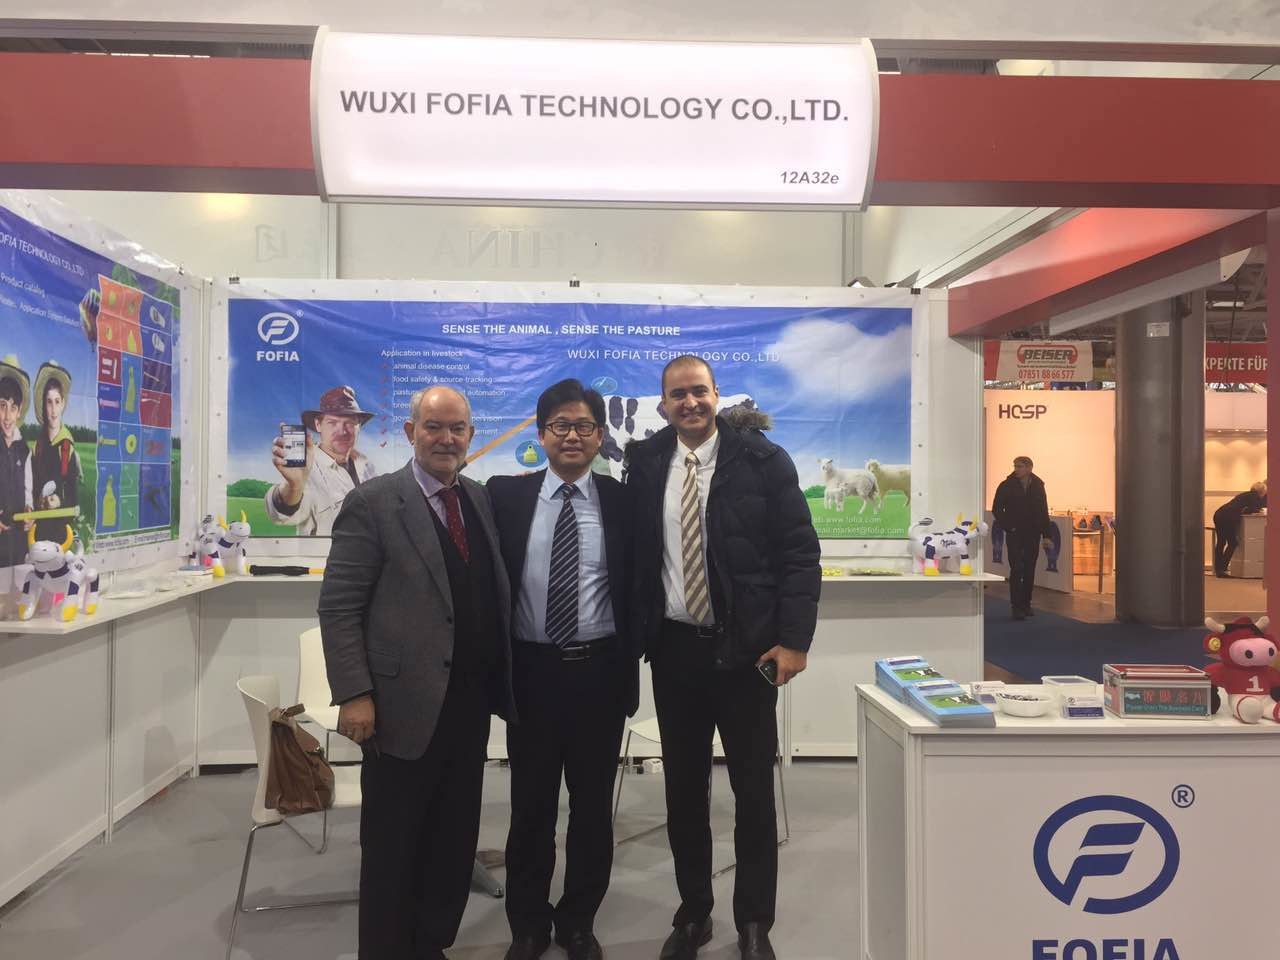 Wuxi Fofia Technology Co., Ltd